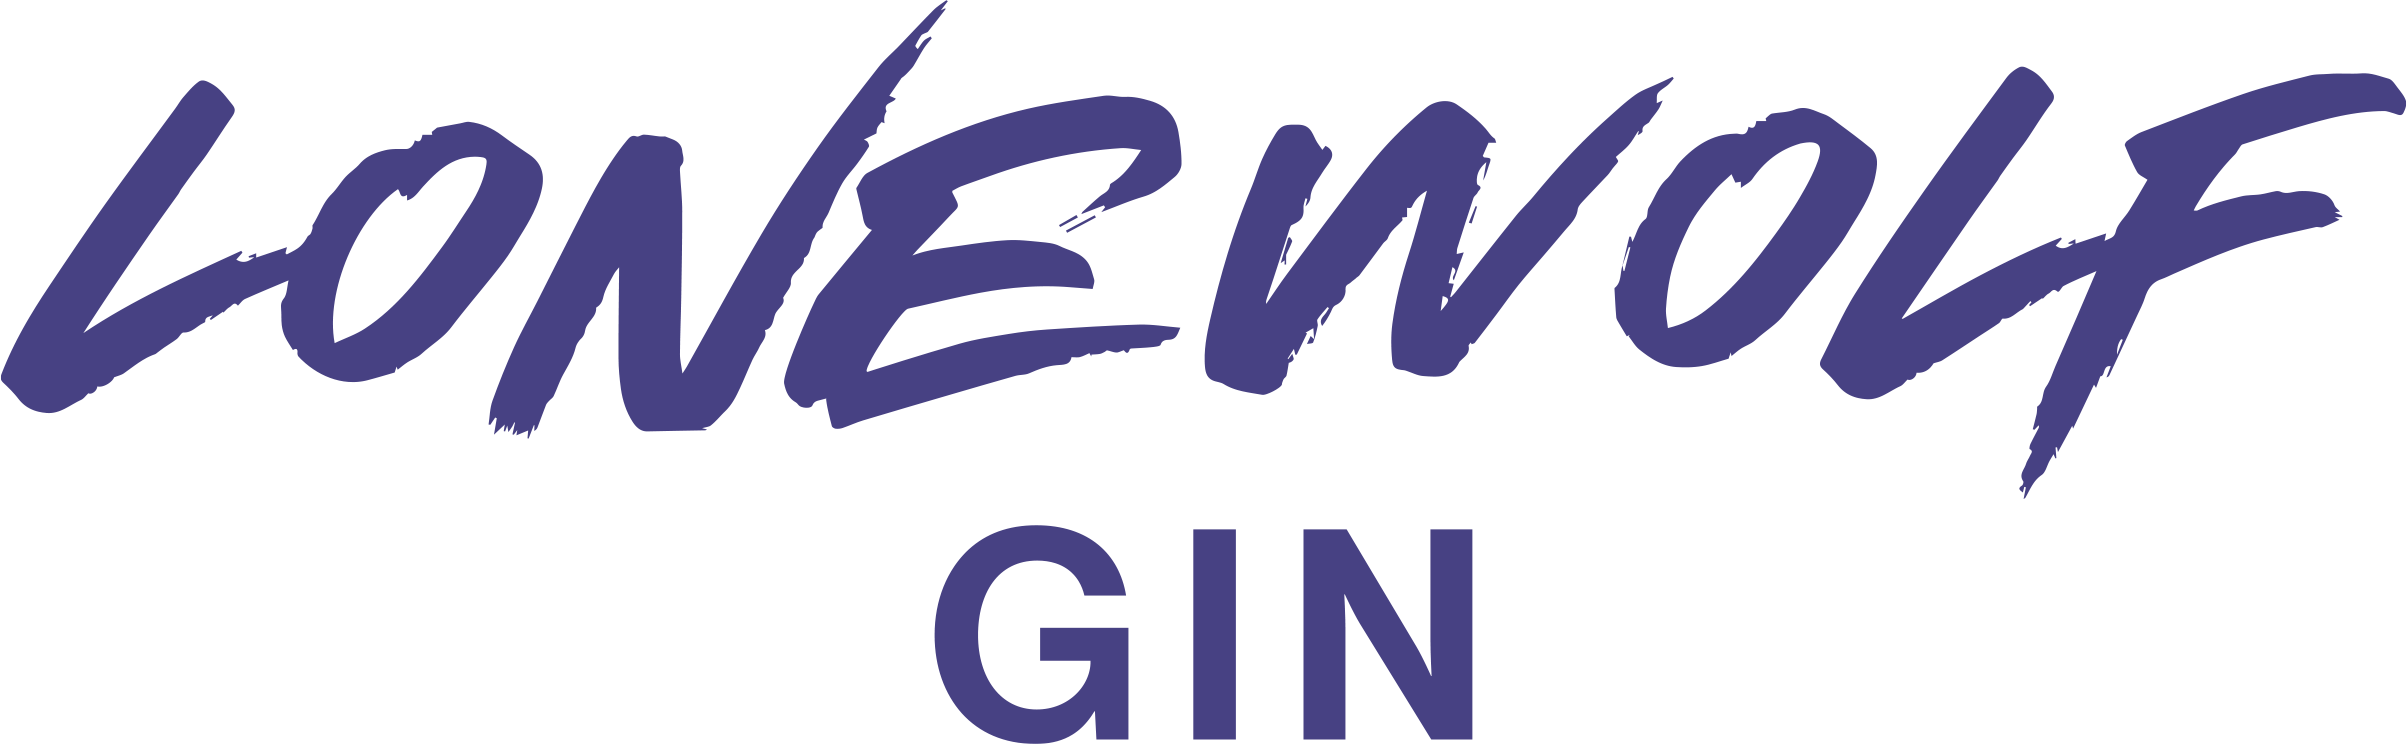 Lone Wolf Gin logo